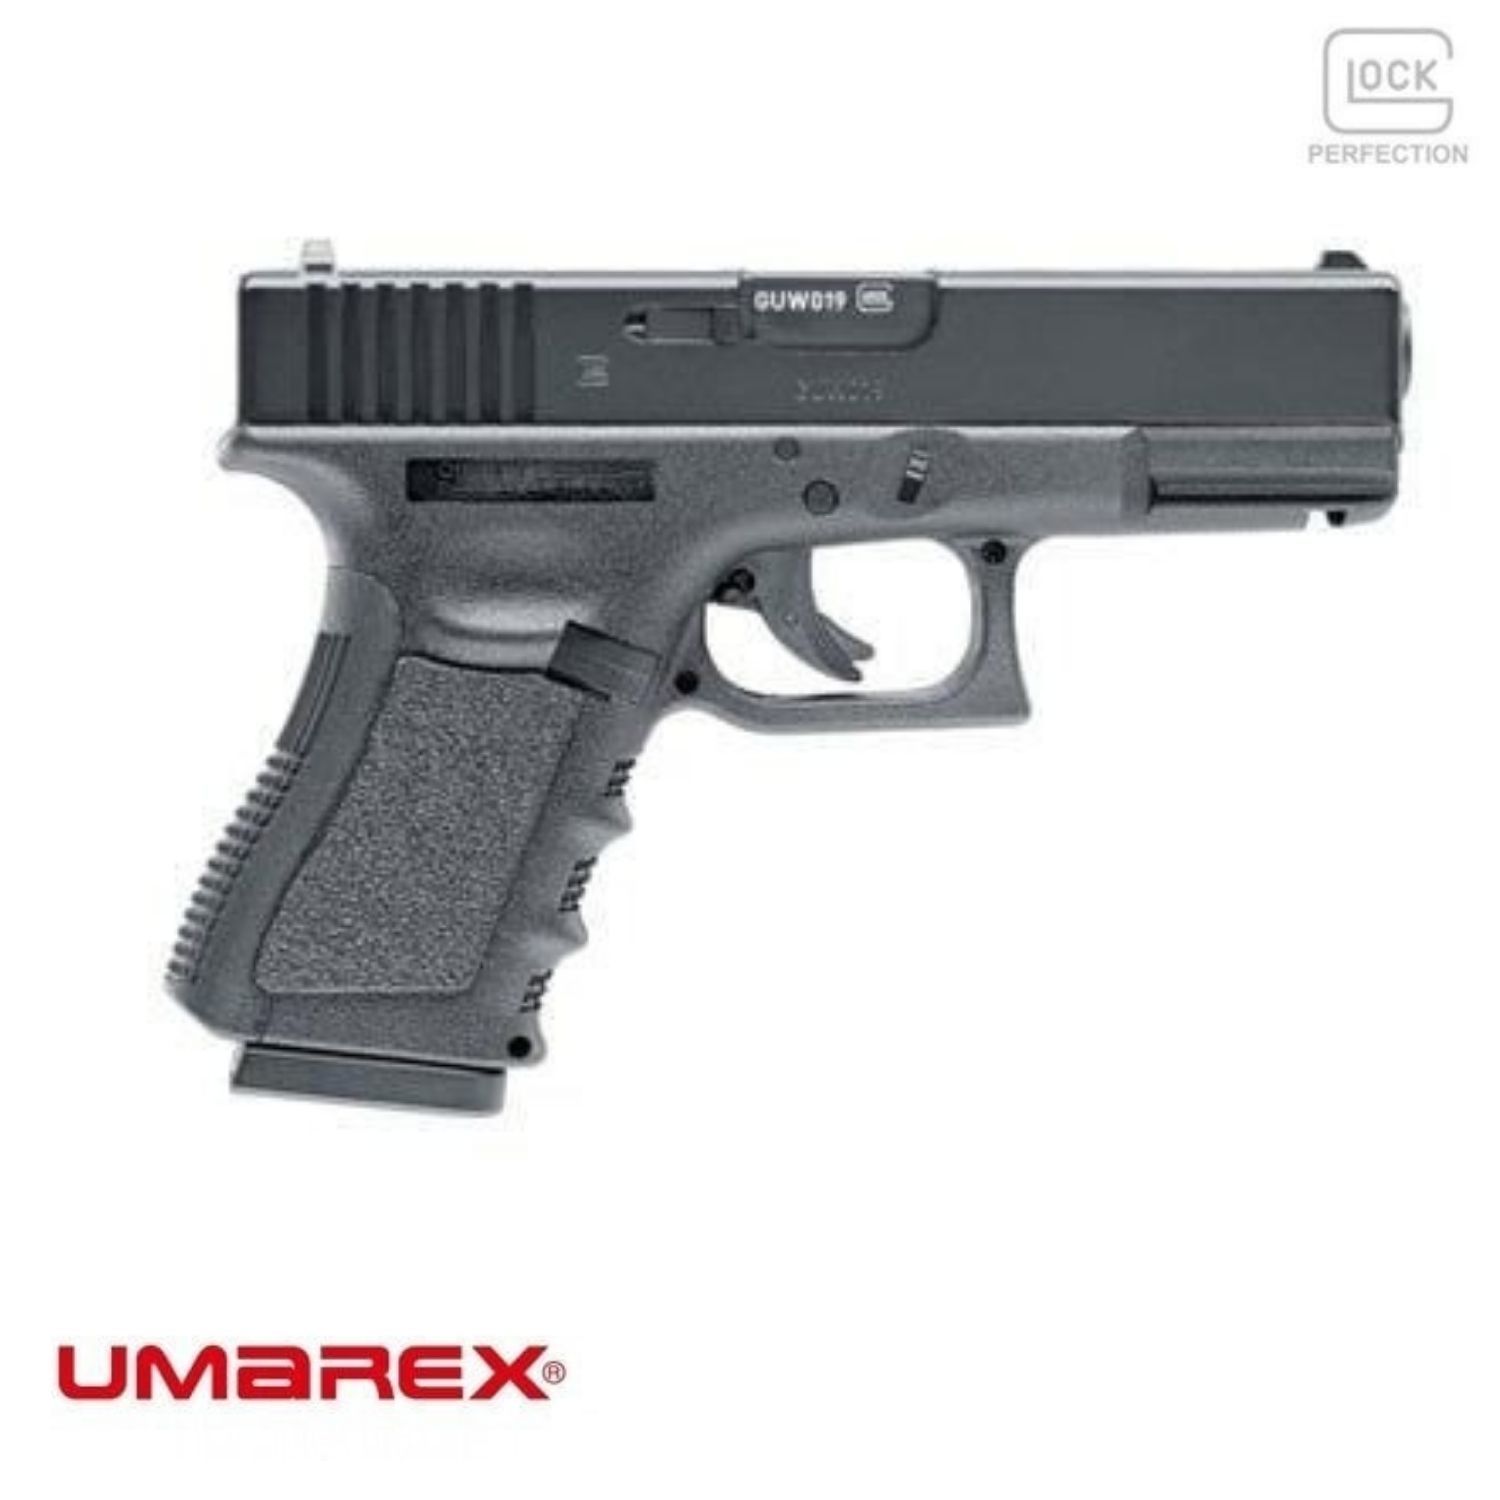 UMAREX Glock19 G19 GEN3 Non-Blowback CO2 Airsoft Tabanca Siyah